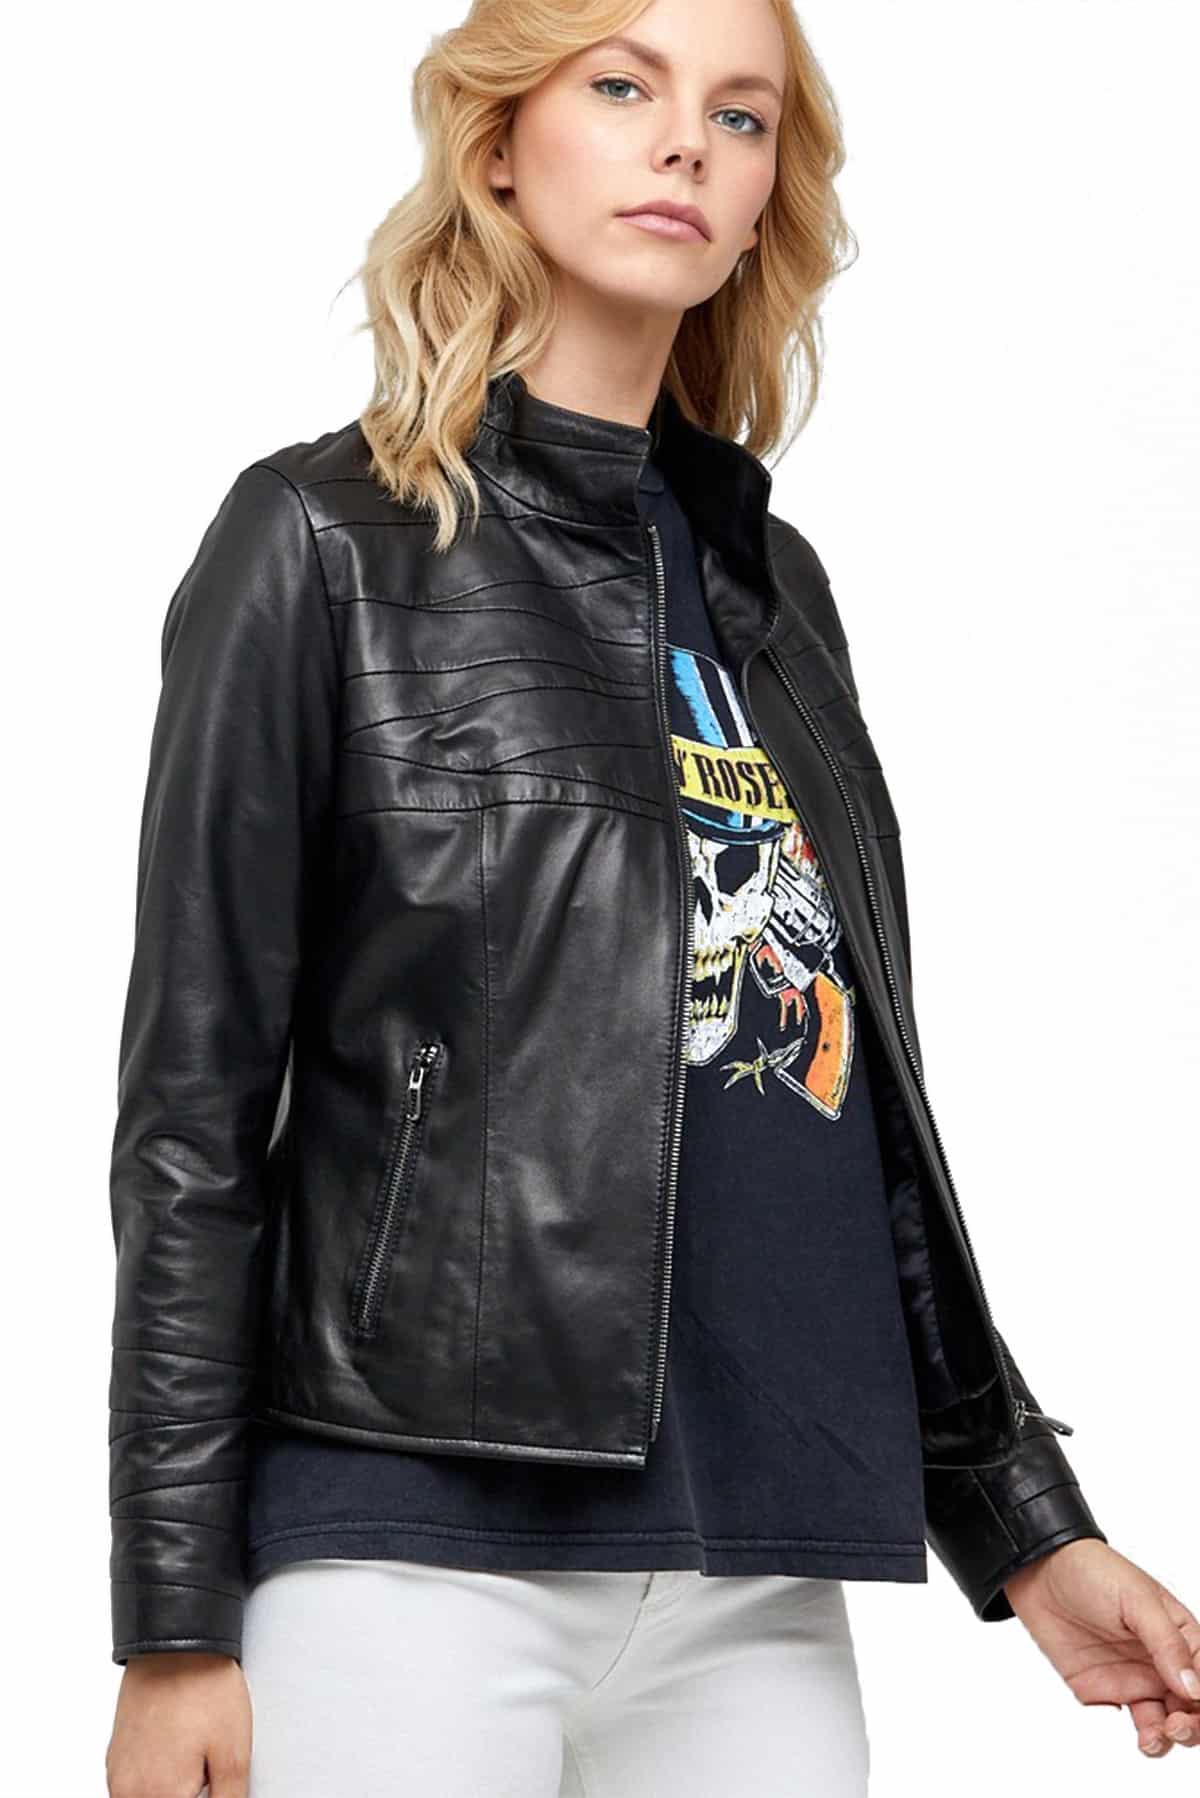 Sherill Women's 100 % Real Black Leather Biker Modern Classic Jacket